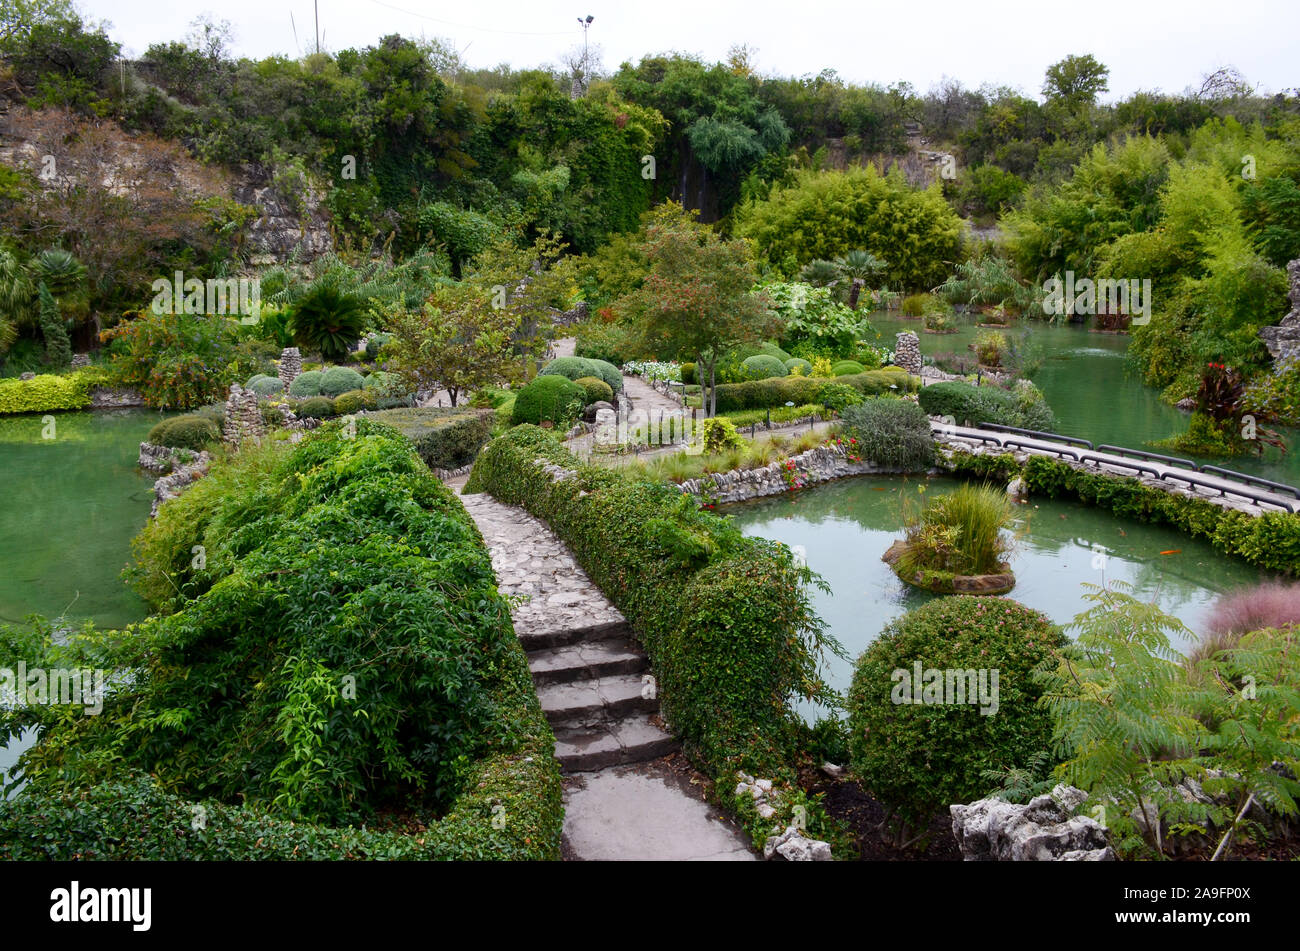 Japanese Tea Garden In San Antonio Texas Picturesque Landscaped